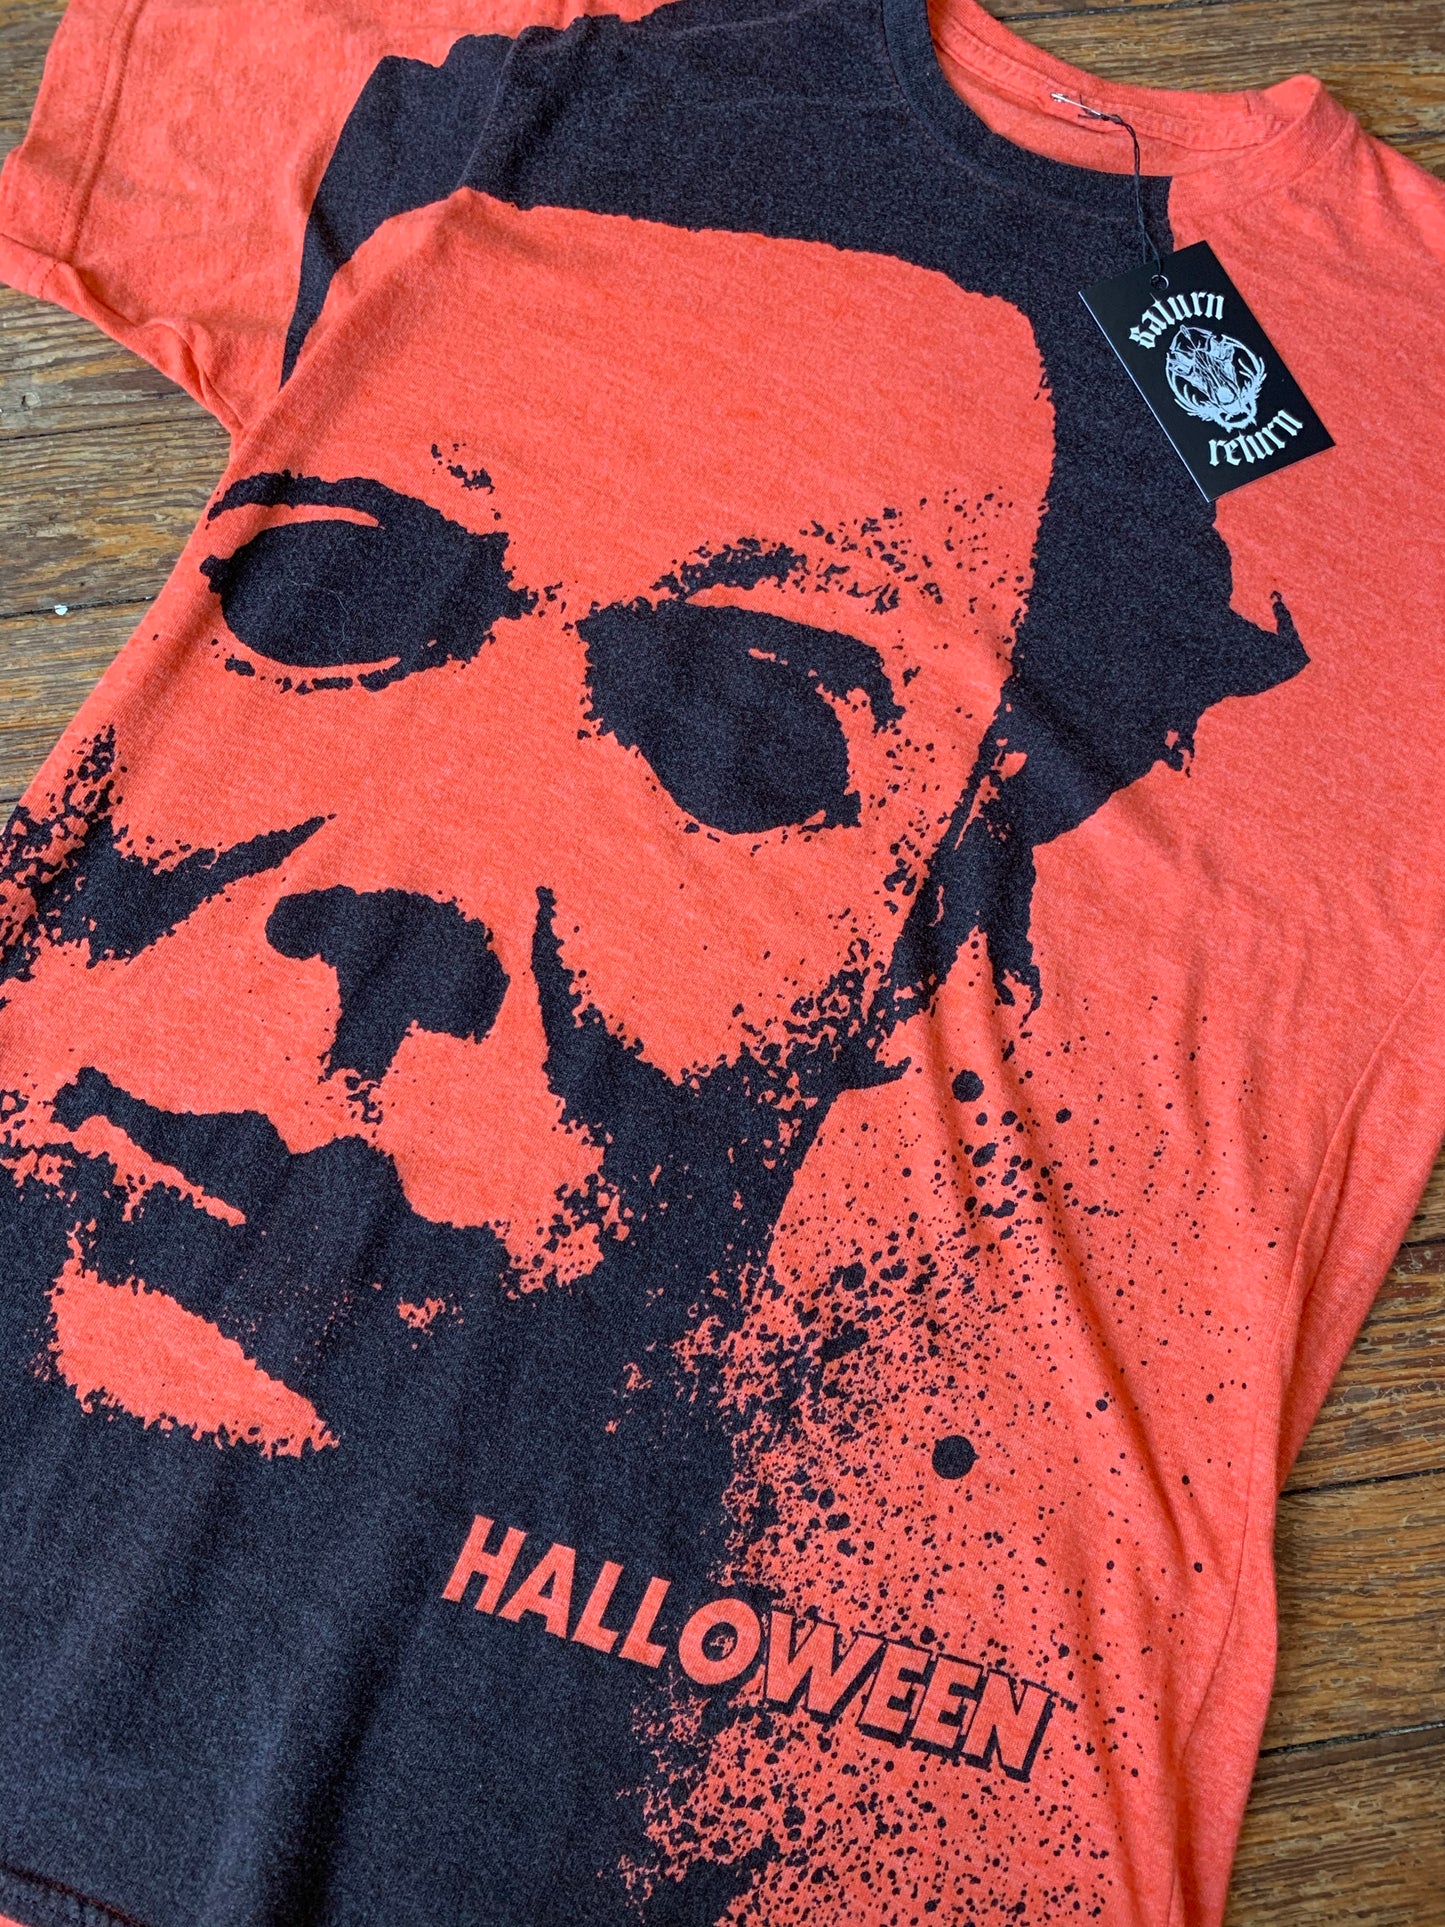 Pre-Loved Orange Halloween Michael Myers Horror Movie T-Shirt